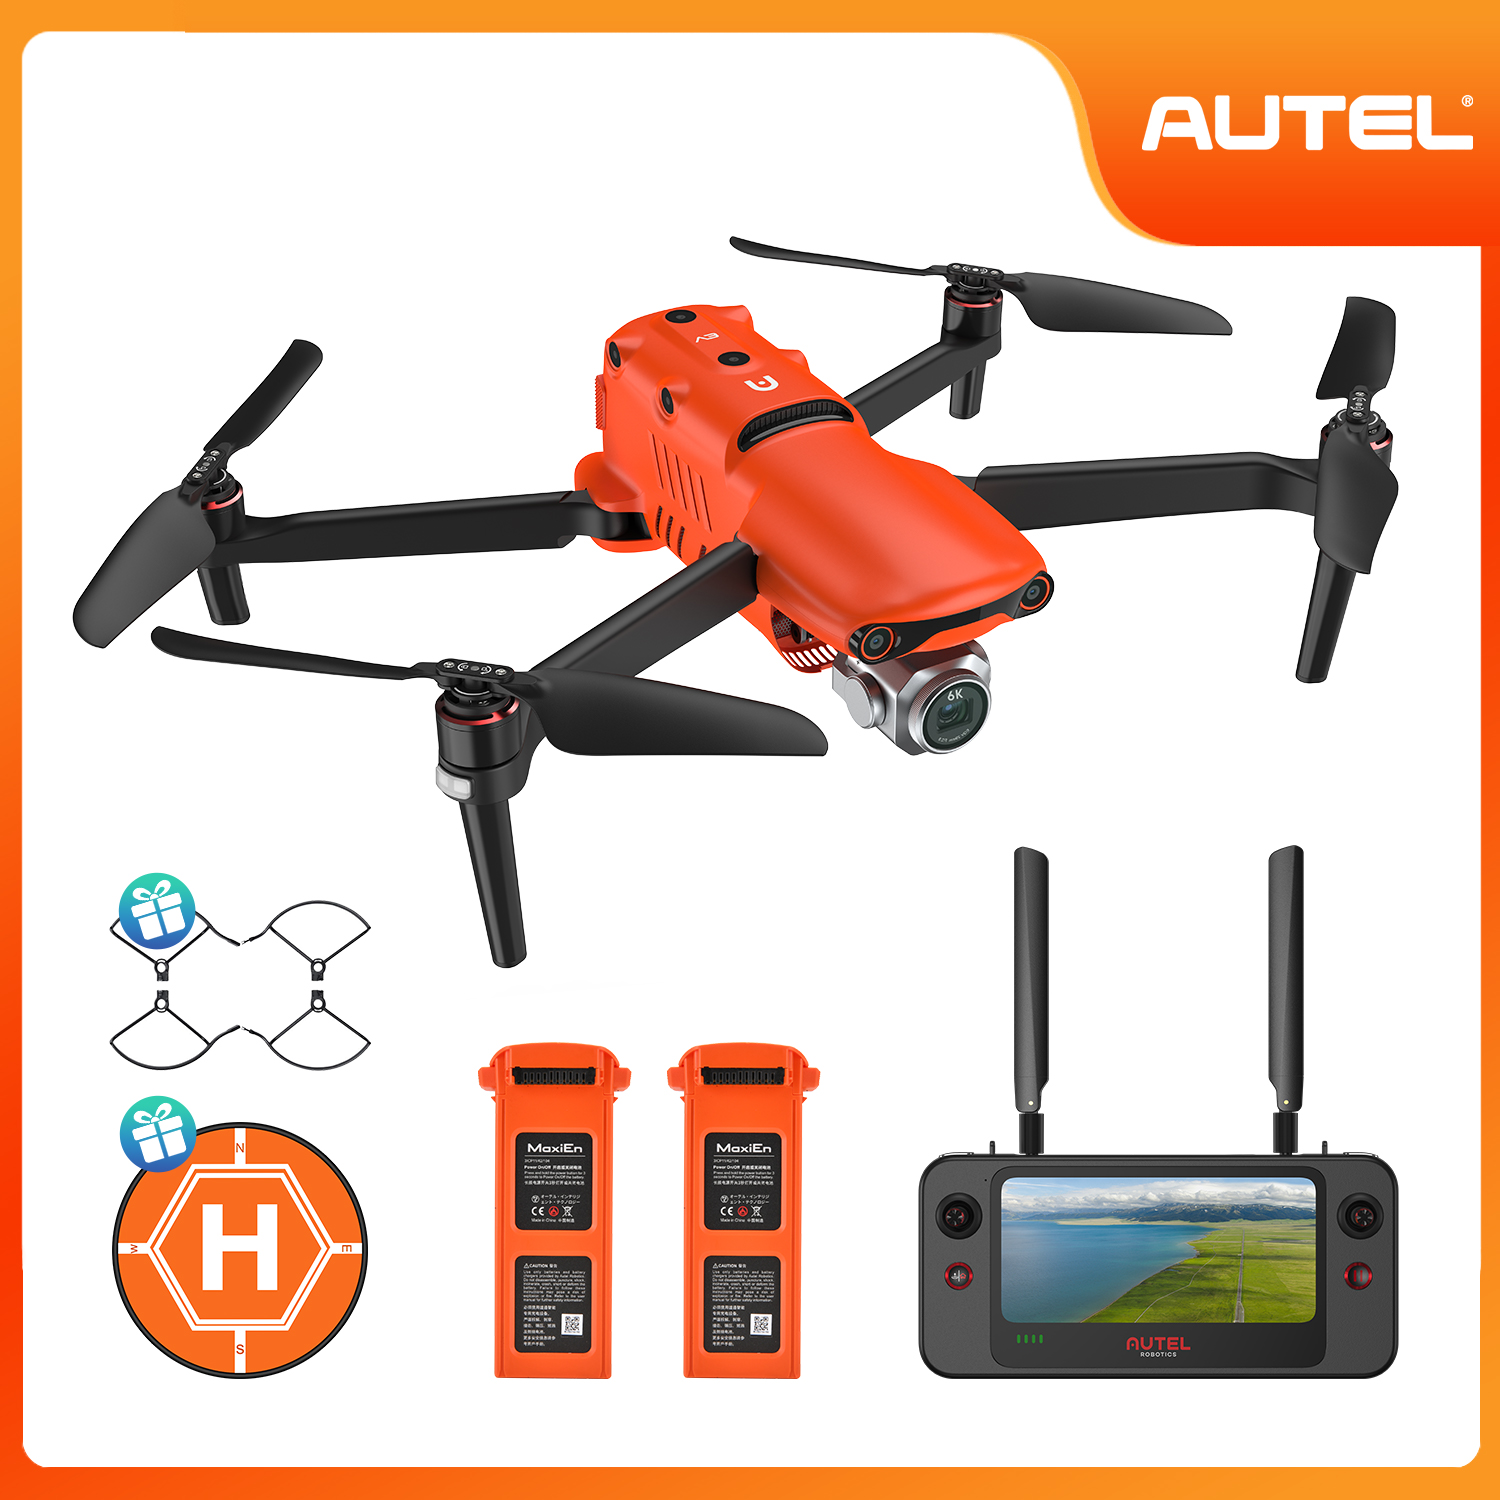 Autel Robotics EVO II Pro V3 Camera Drone